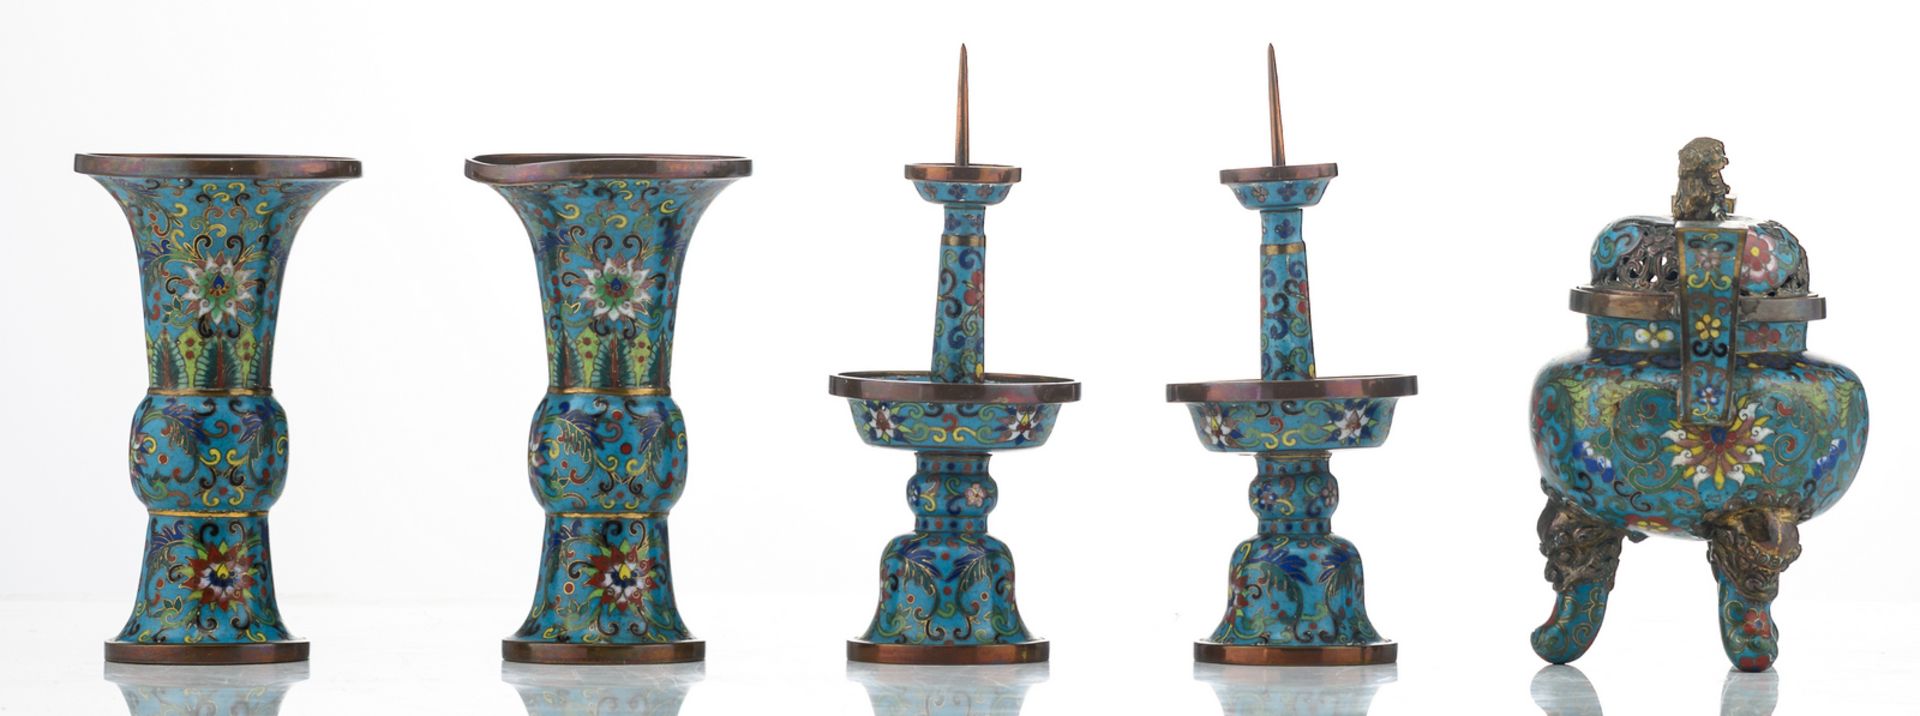 A miniature set of Chinese cloisonné enamel vases, candle sticks and an incense burner, 19thC, H - Bild 4 aus 6